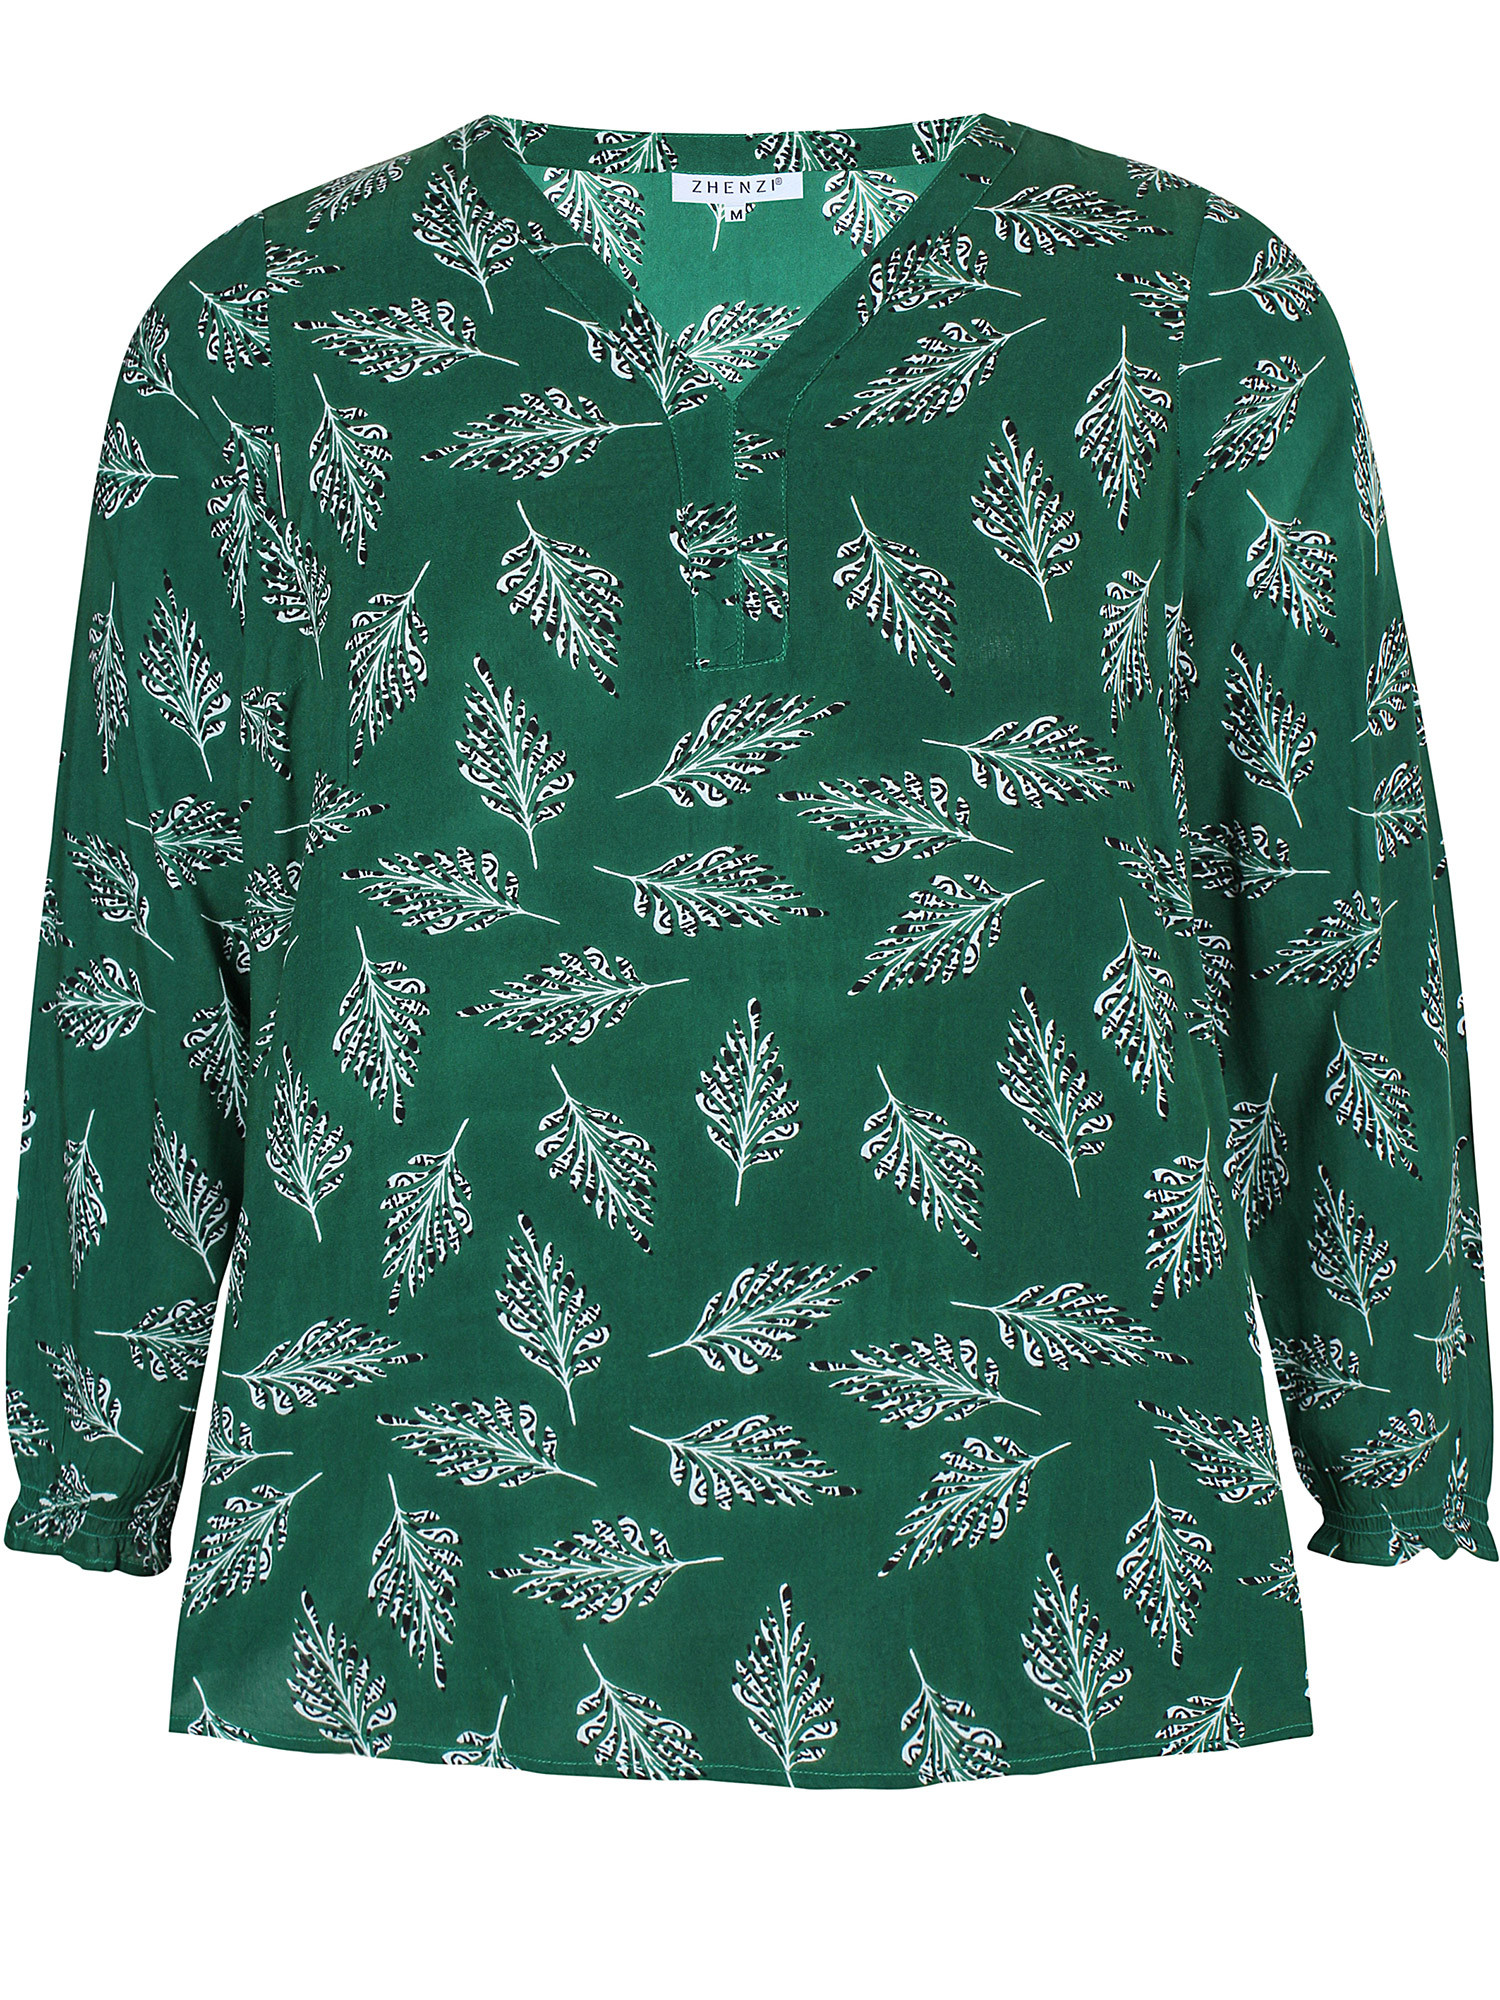 Jimena - Flot grøn skjorte tunika i bæredygtig viskose modal med fint fjer print